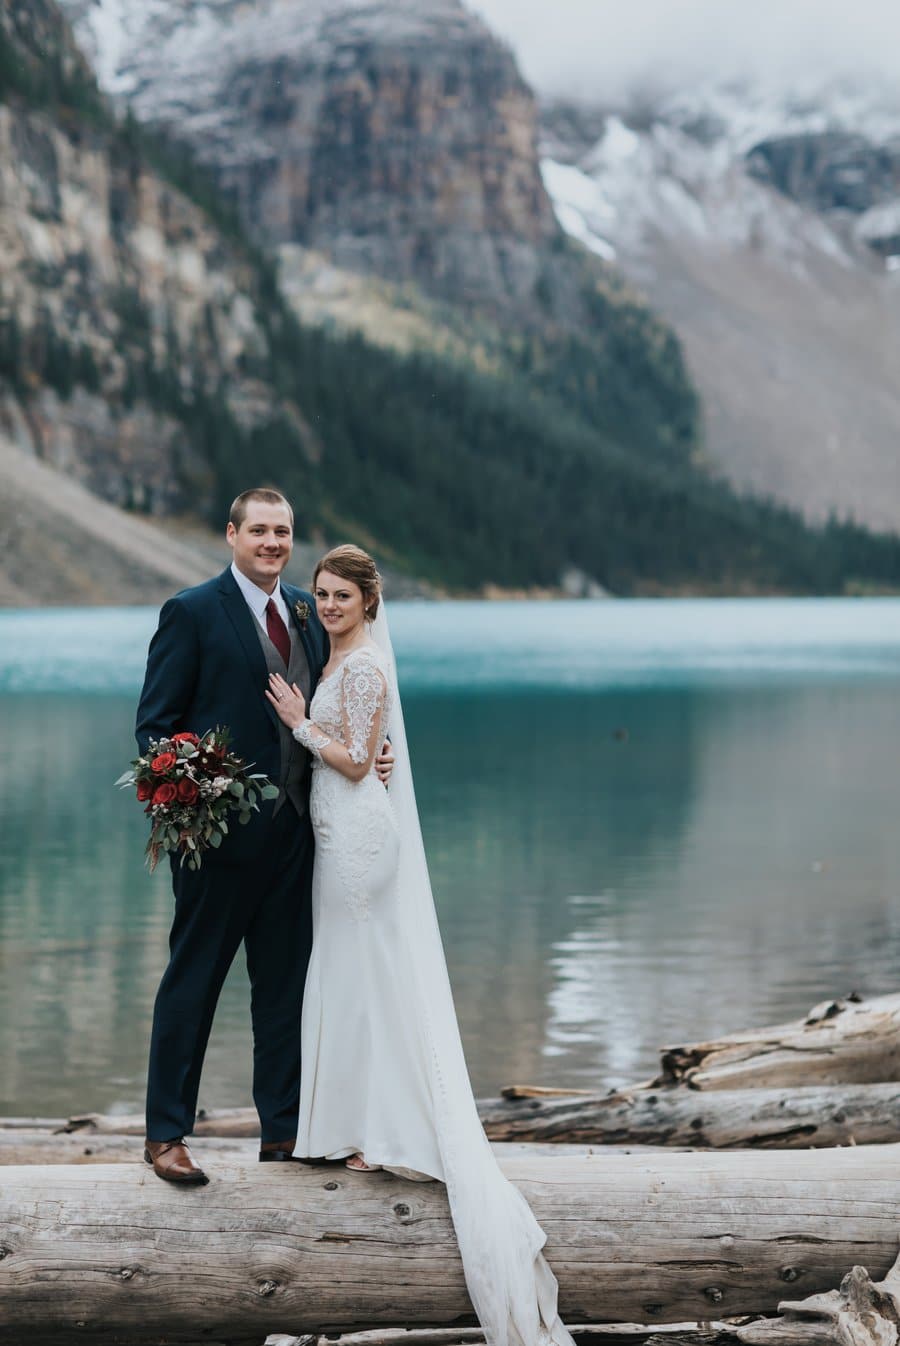 Moraine Lake elopement wedding photography